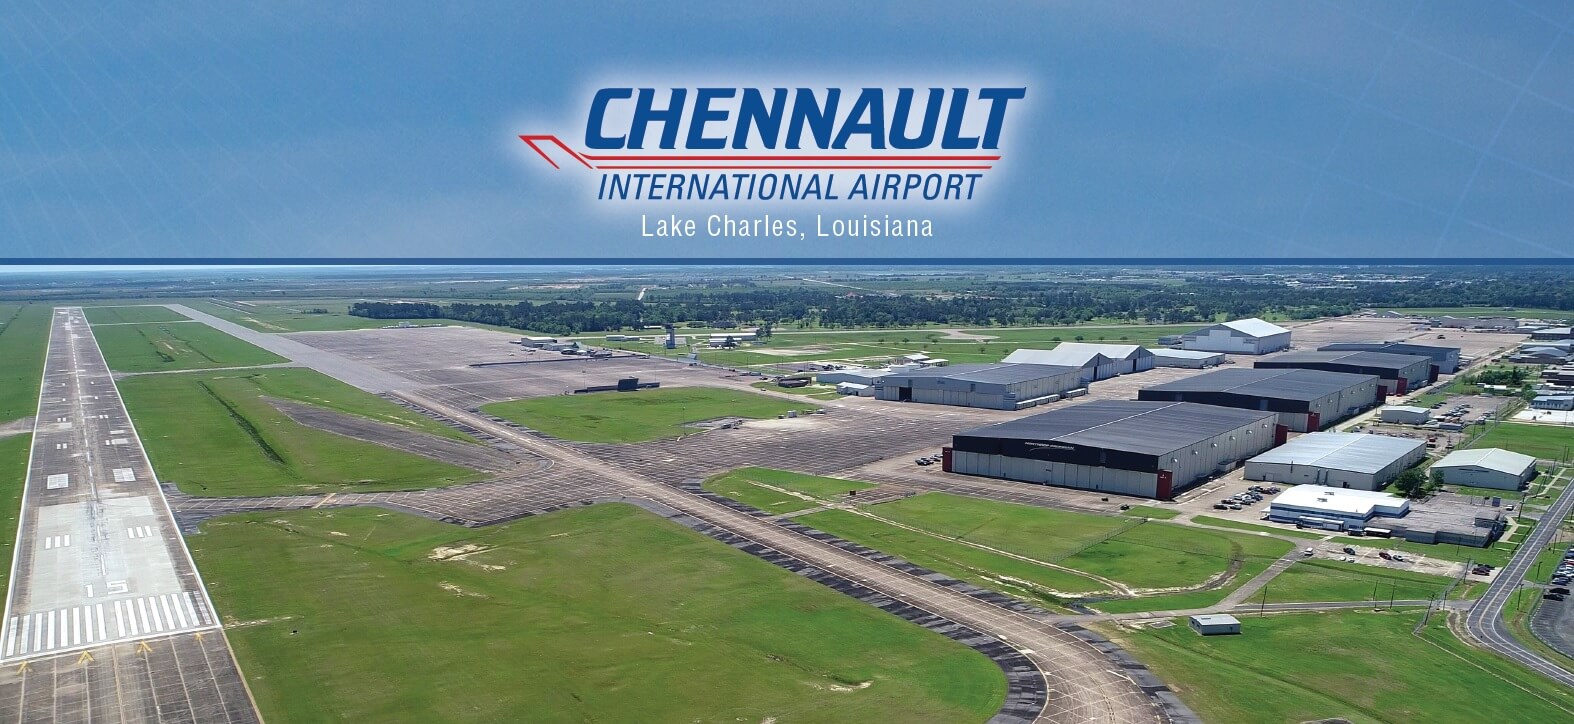 Chennault International Airport - Lake Charles, LA